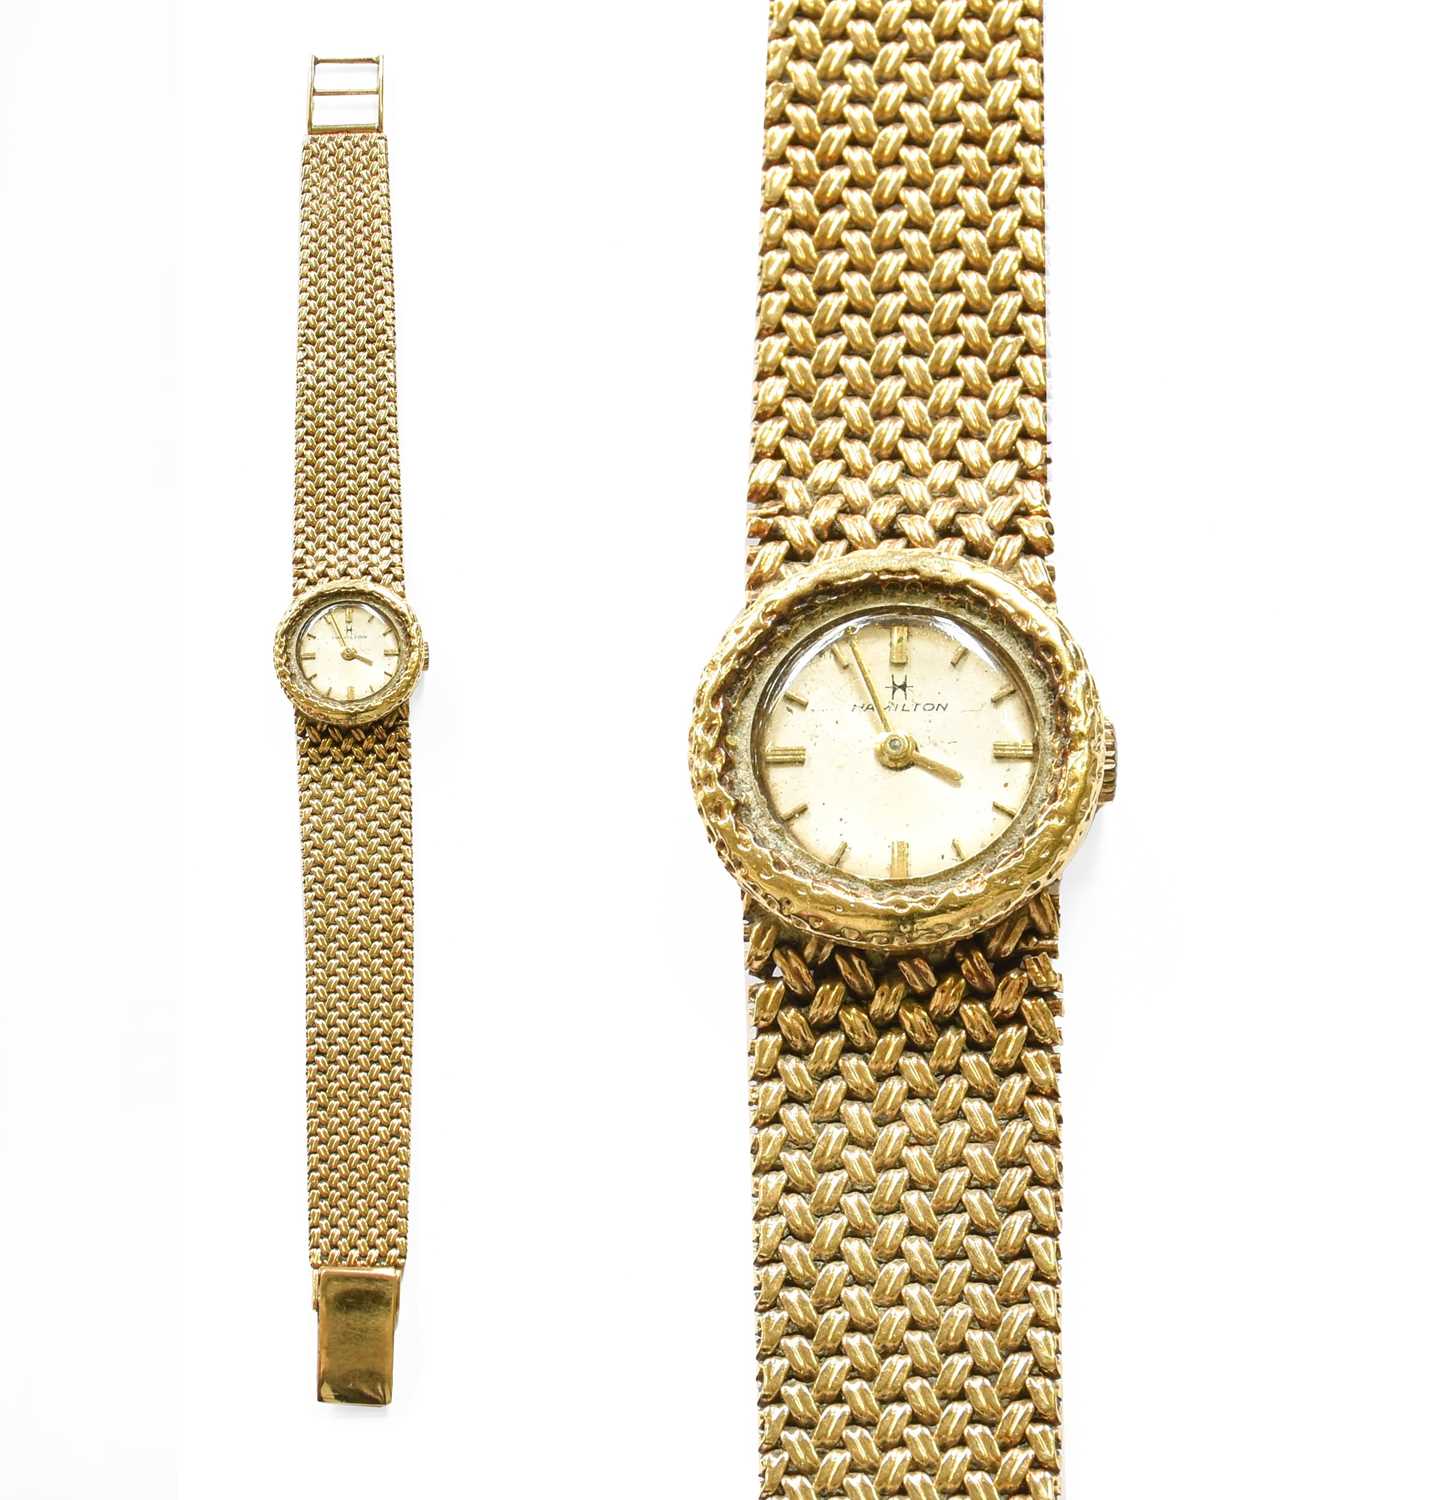 A Lady's 9 Carat Gold Hamilton Wristwatch, 9 carat gold integral bracelet Gross weight - 30 grams